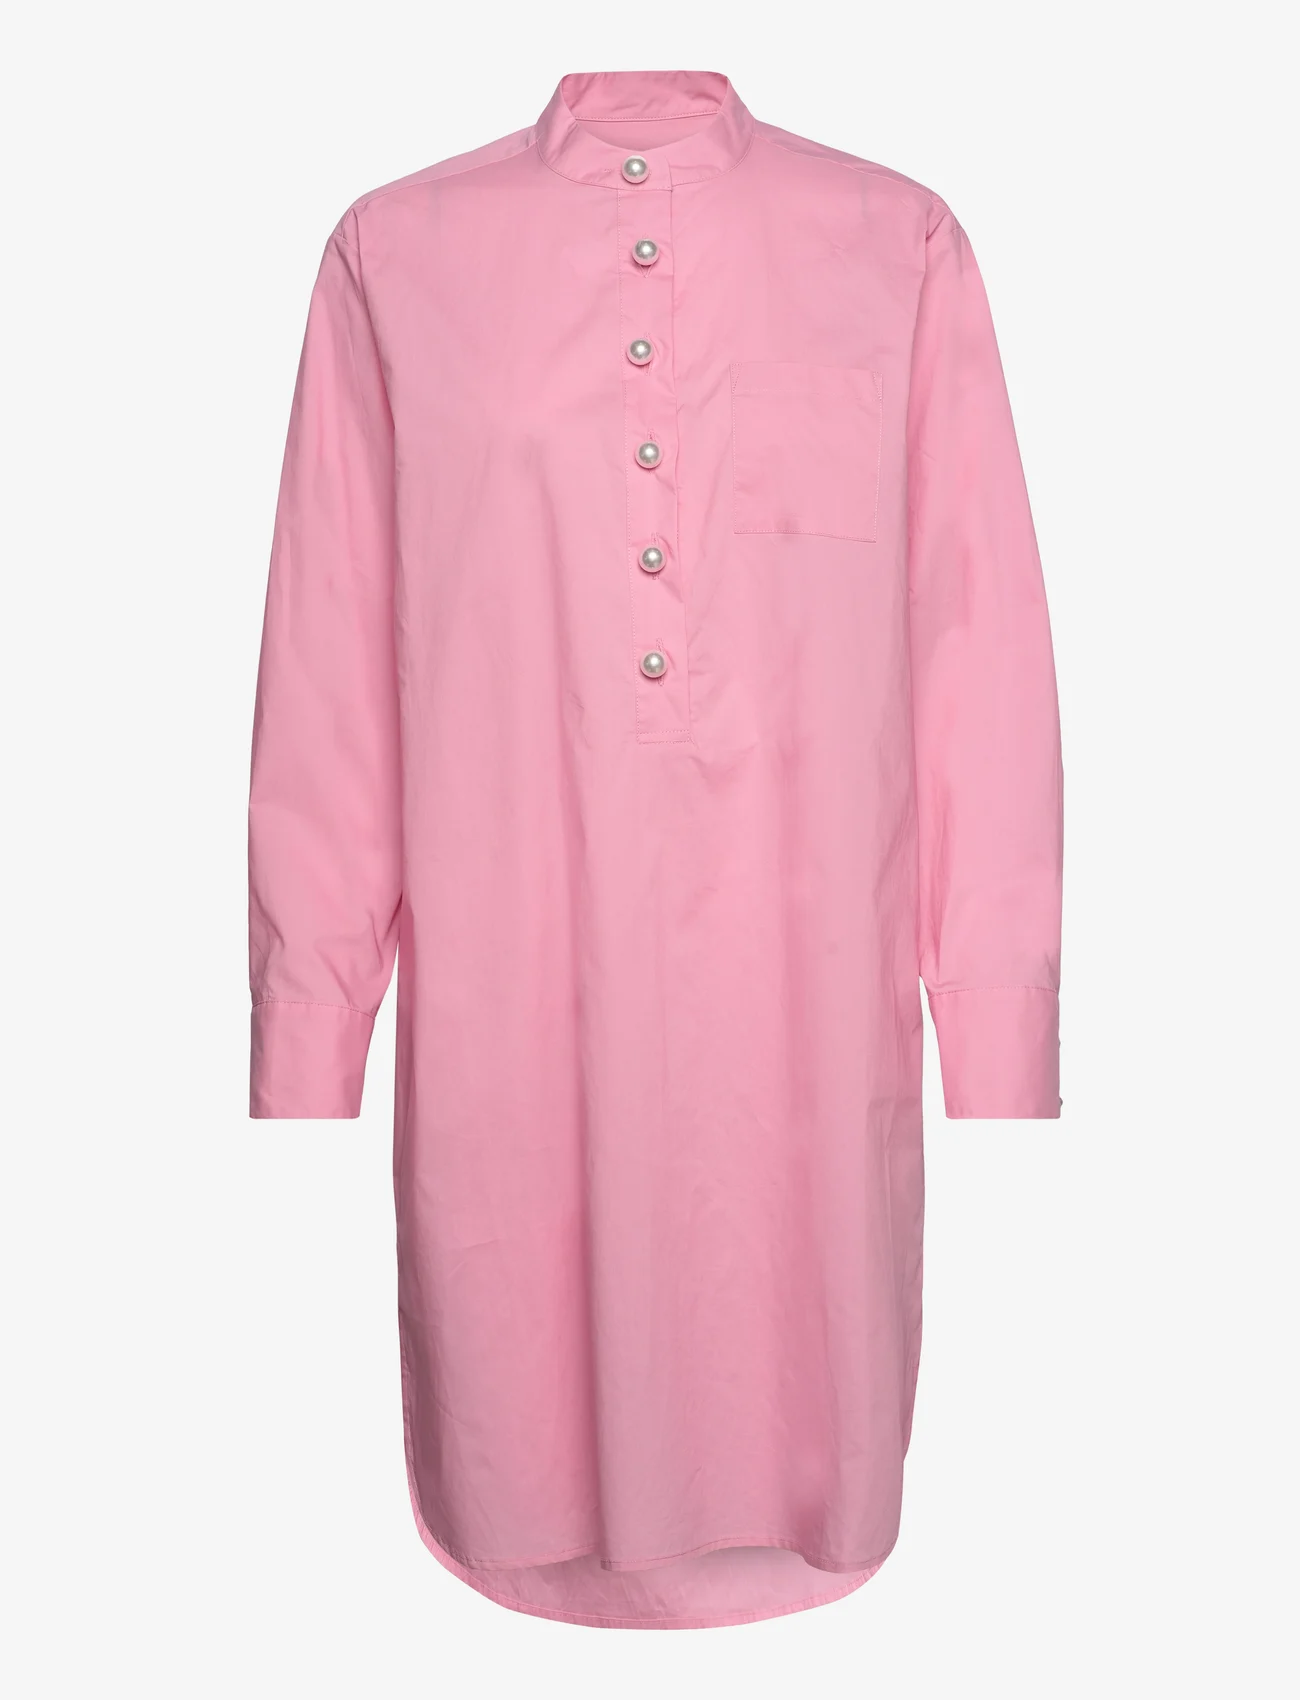 Custommade - Jonella - marškinių tipo suknelės - 157 sea pink - 0